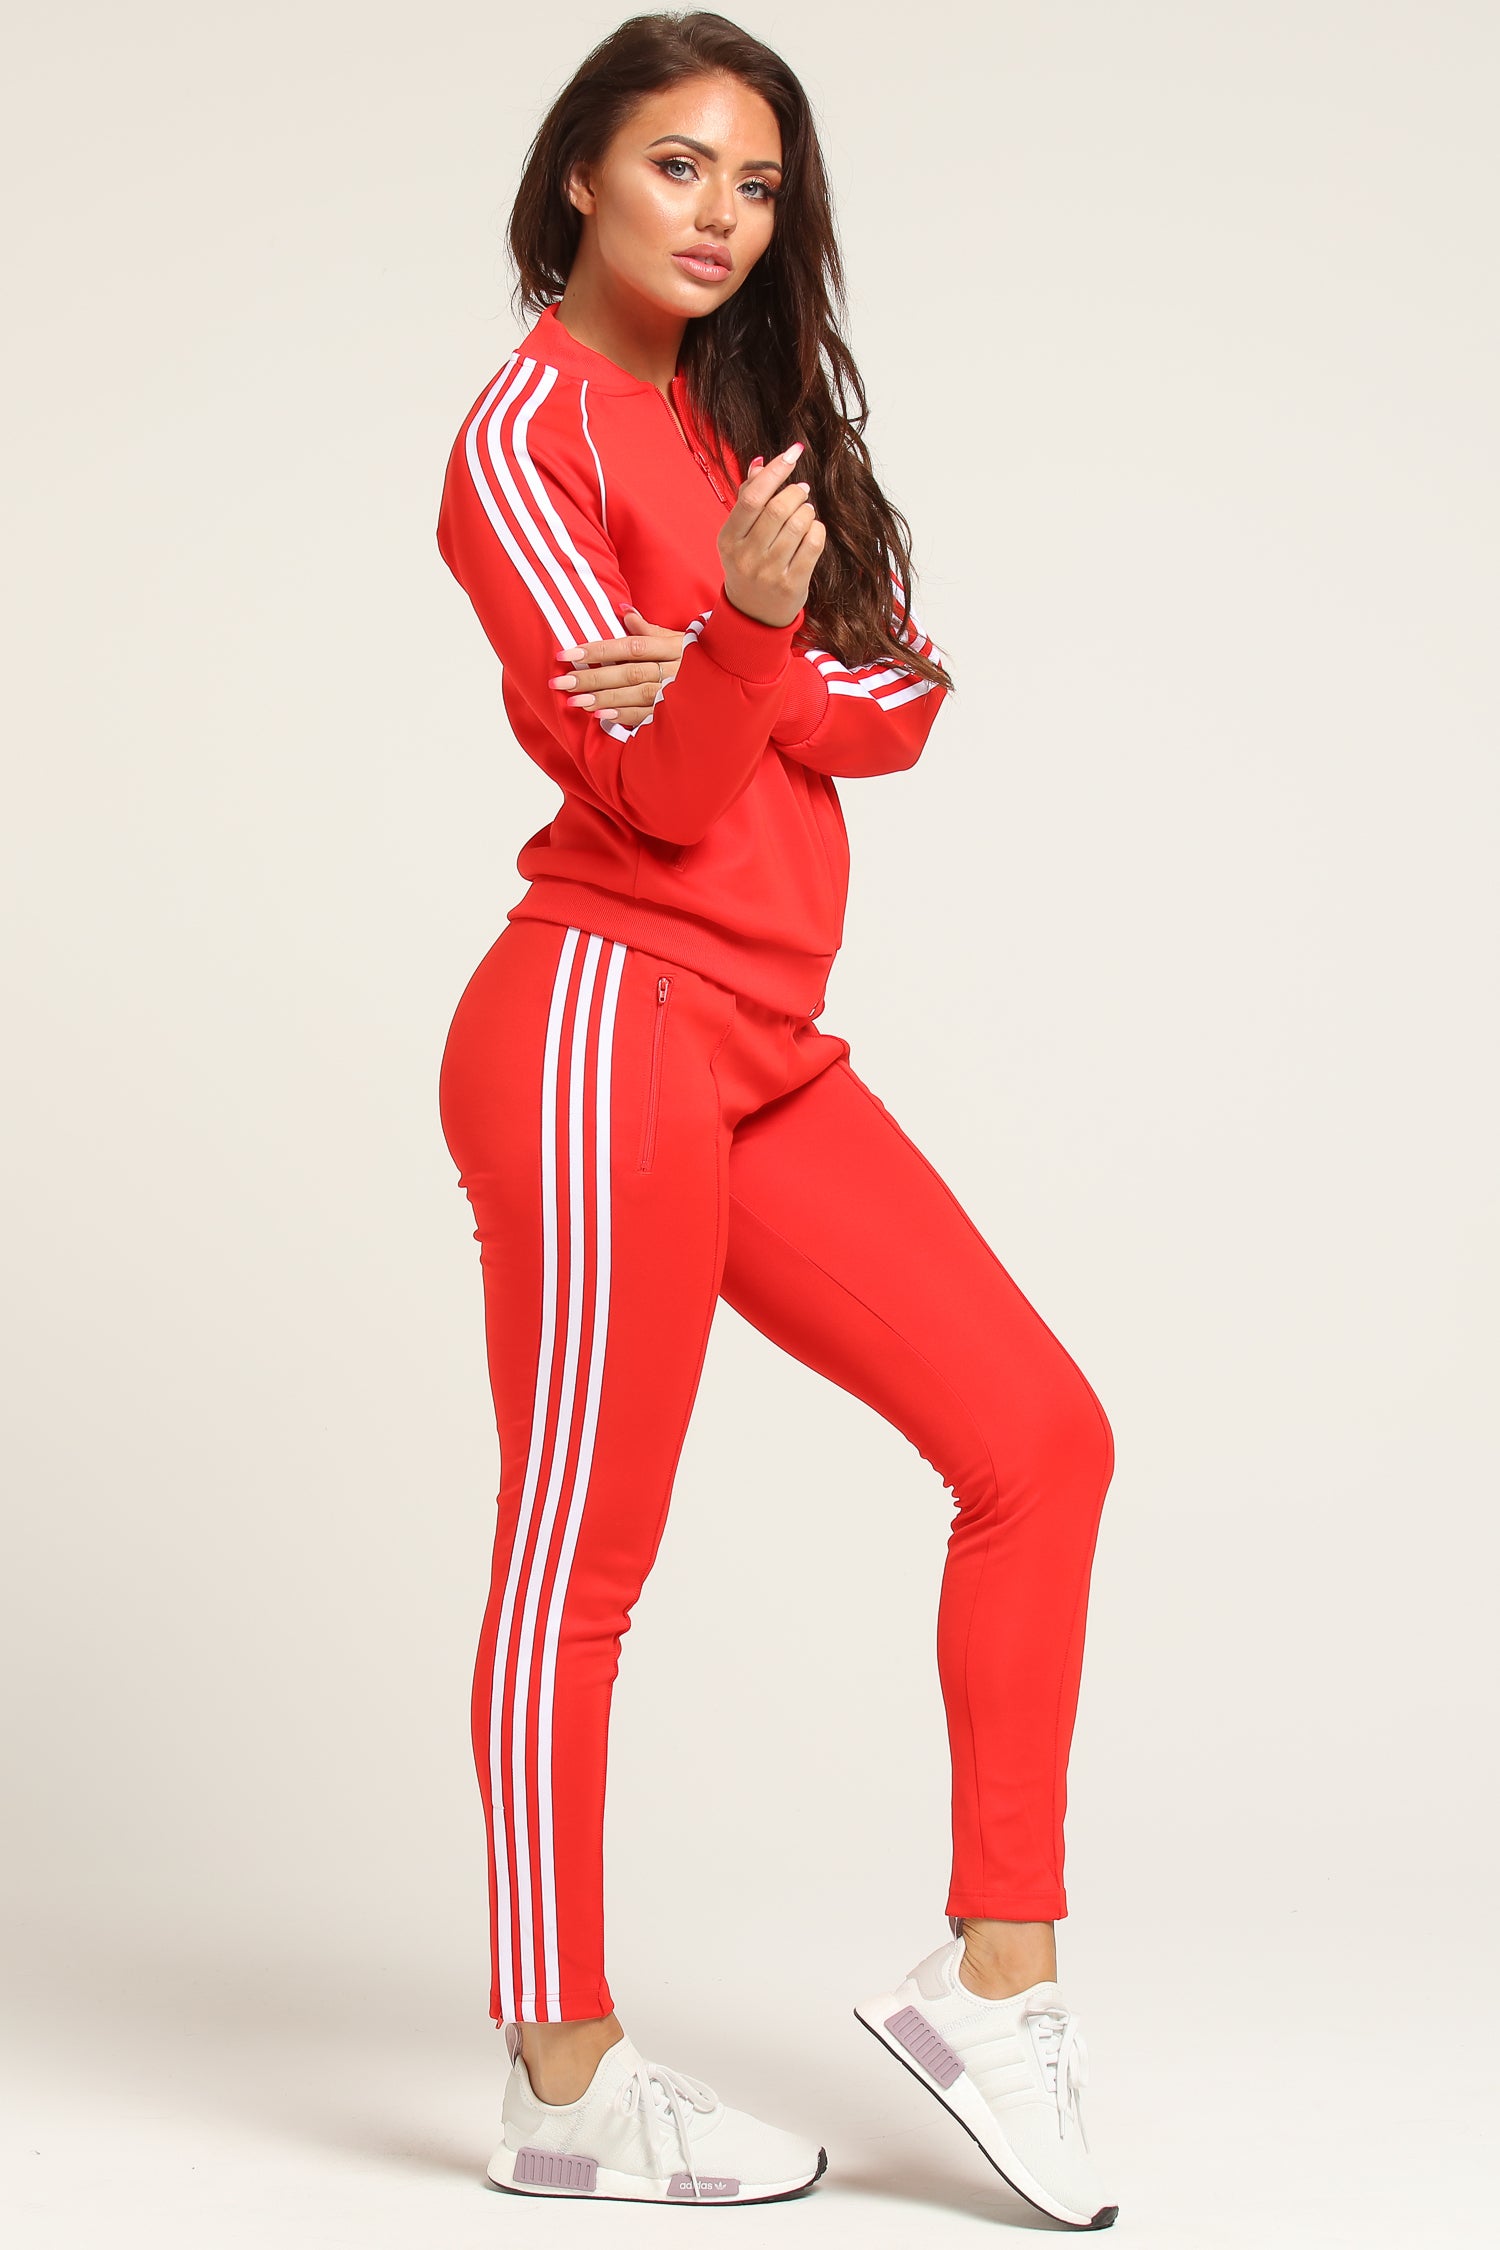 red adidas tracksuit ladies